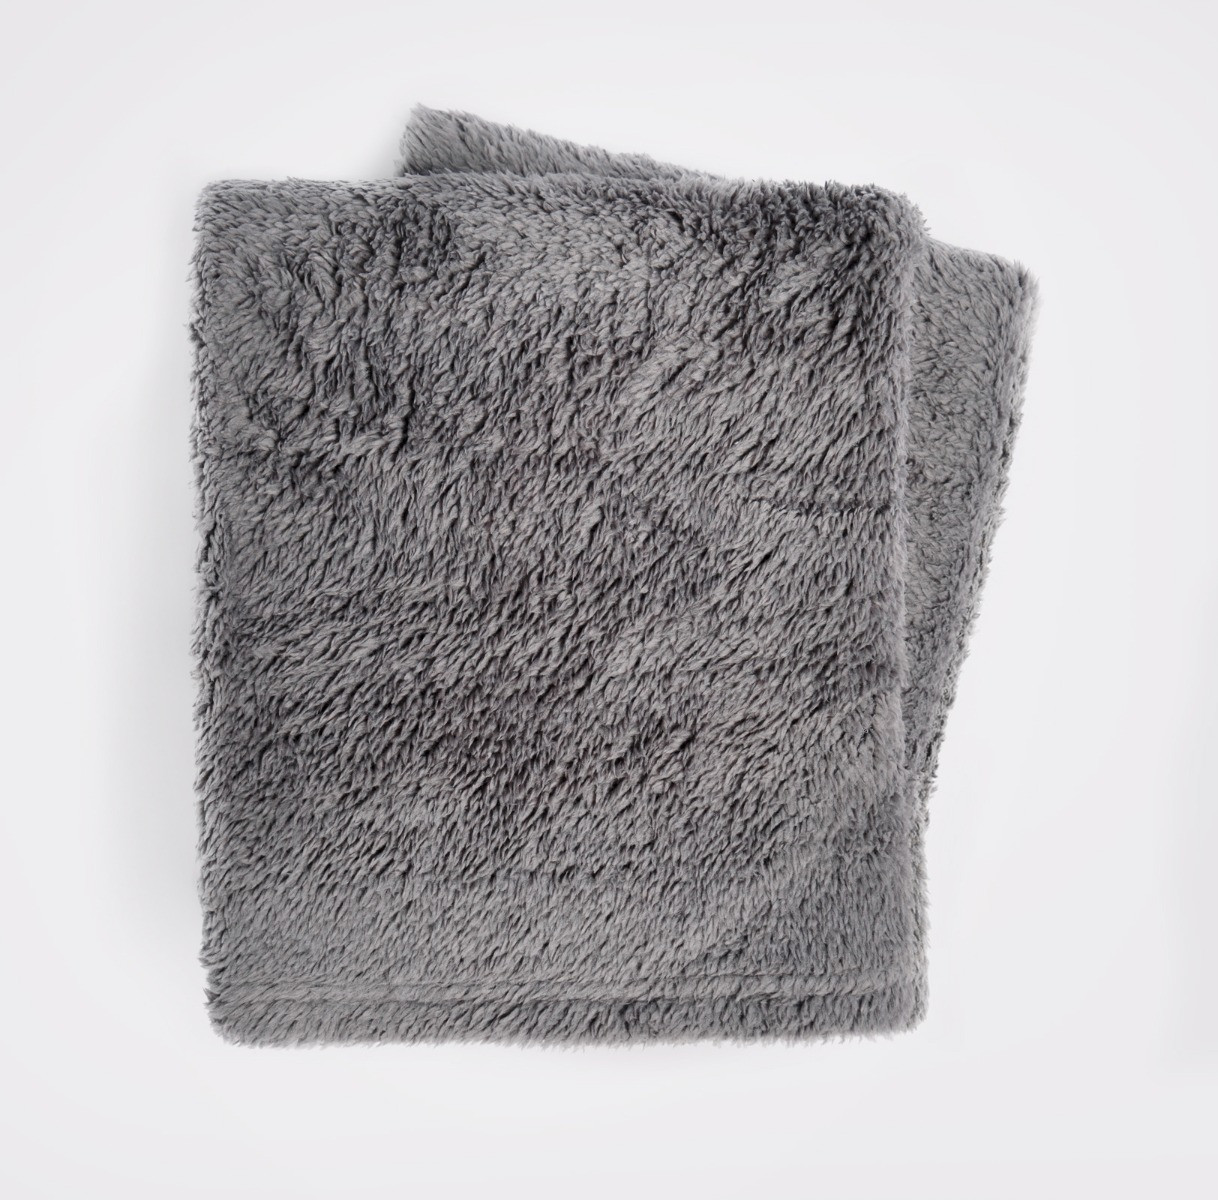 Brentfords Teddy Fleece Blanket Soft Throw Over Bed, Charcoal Grey - 125 x 150cm>